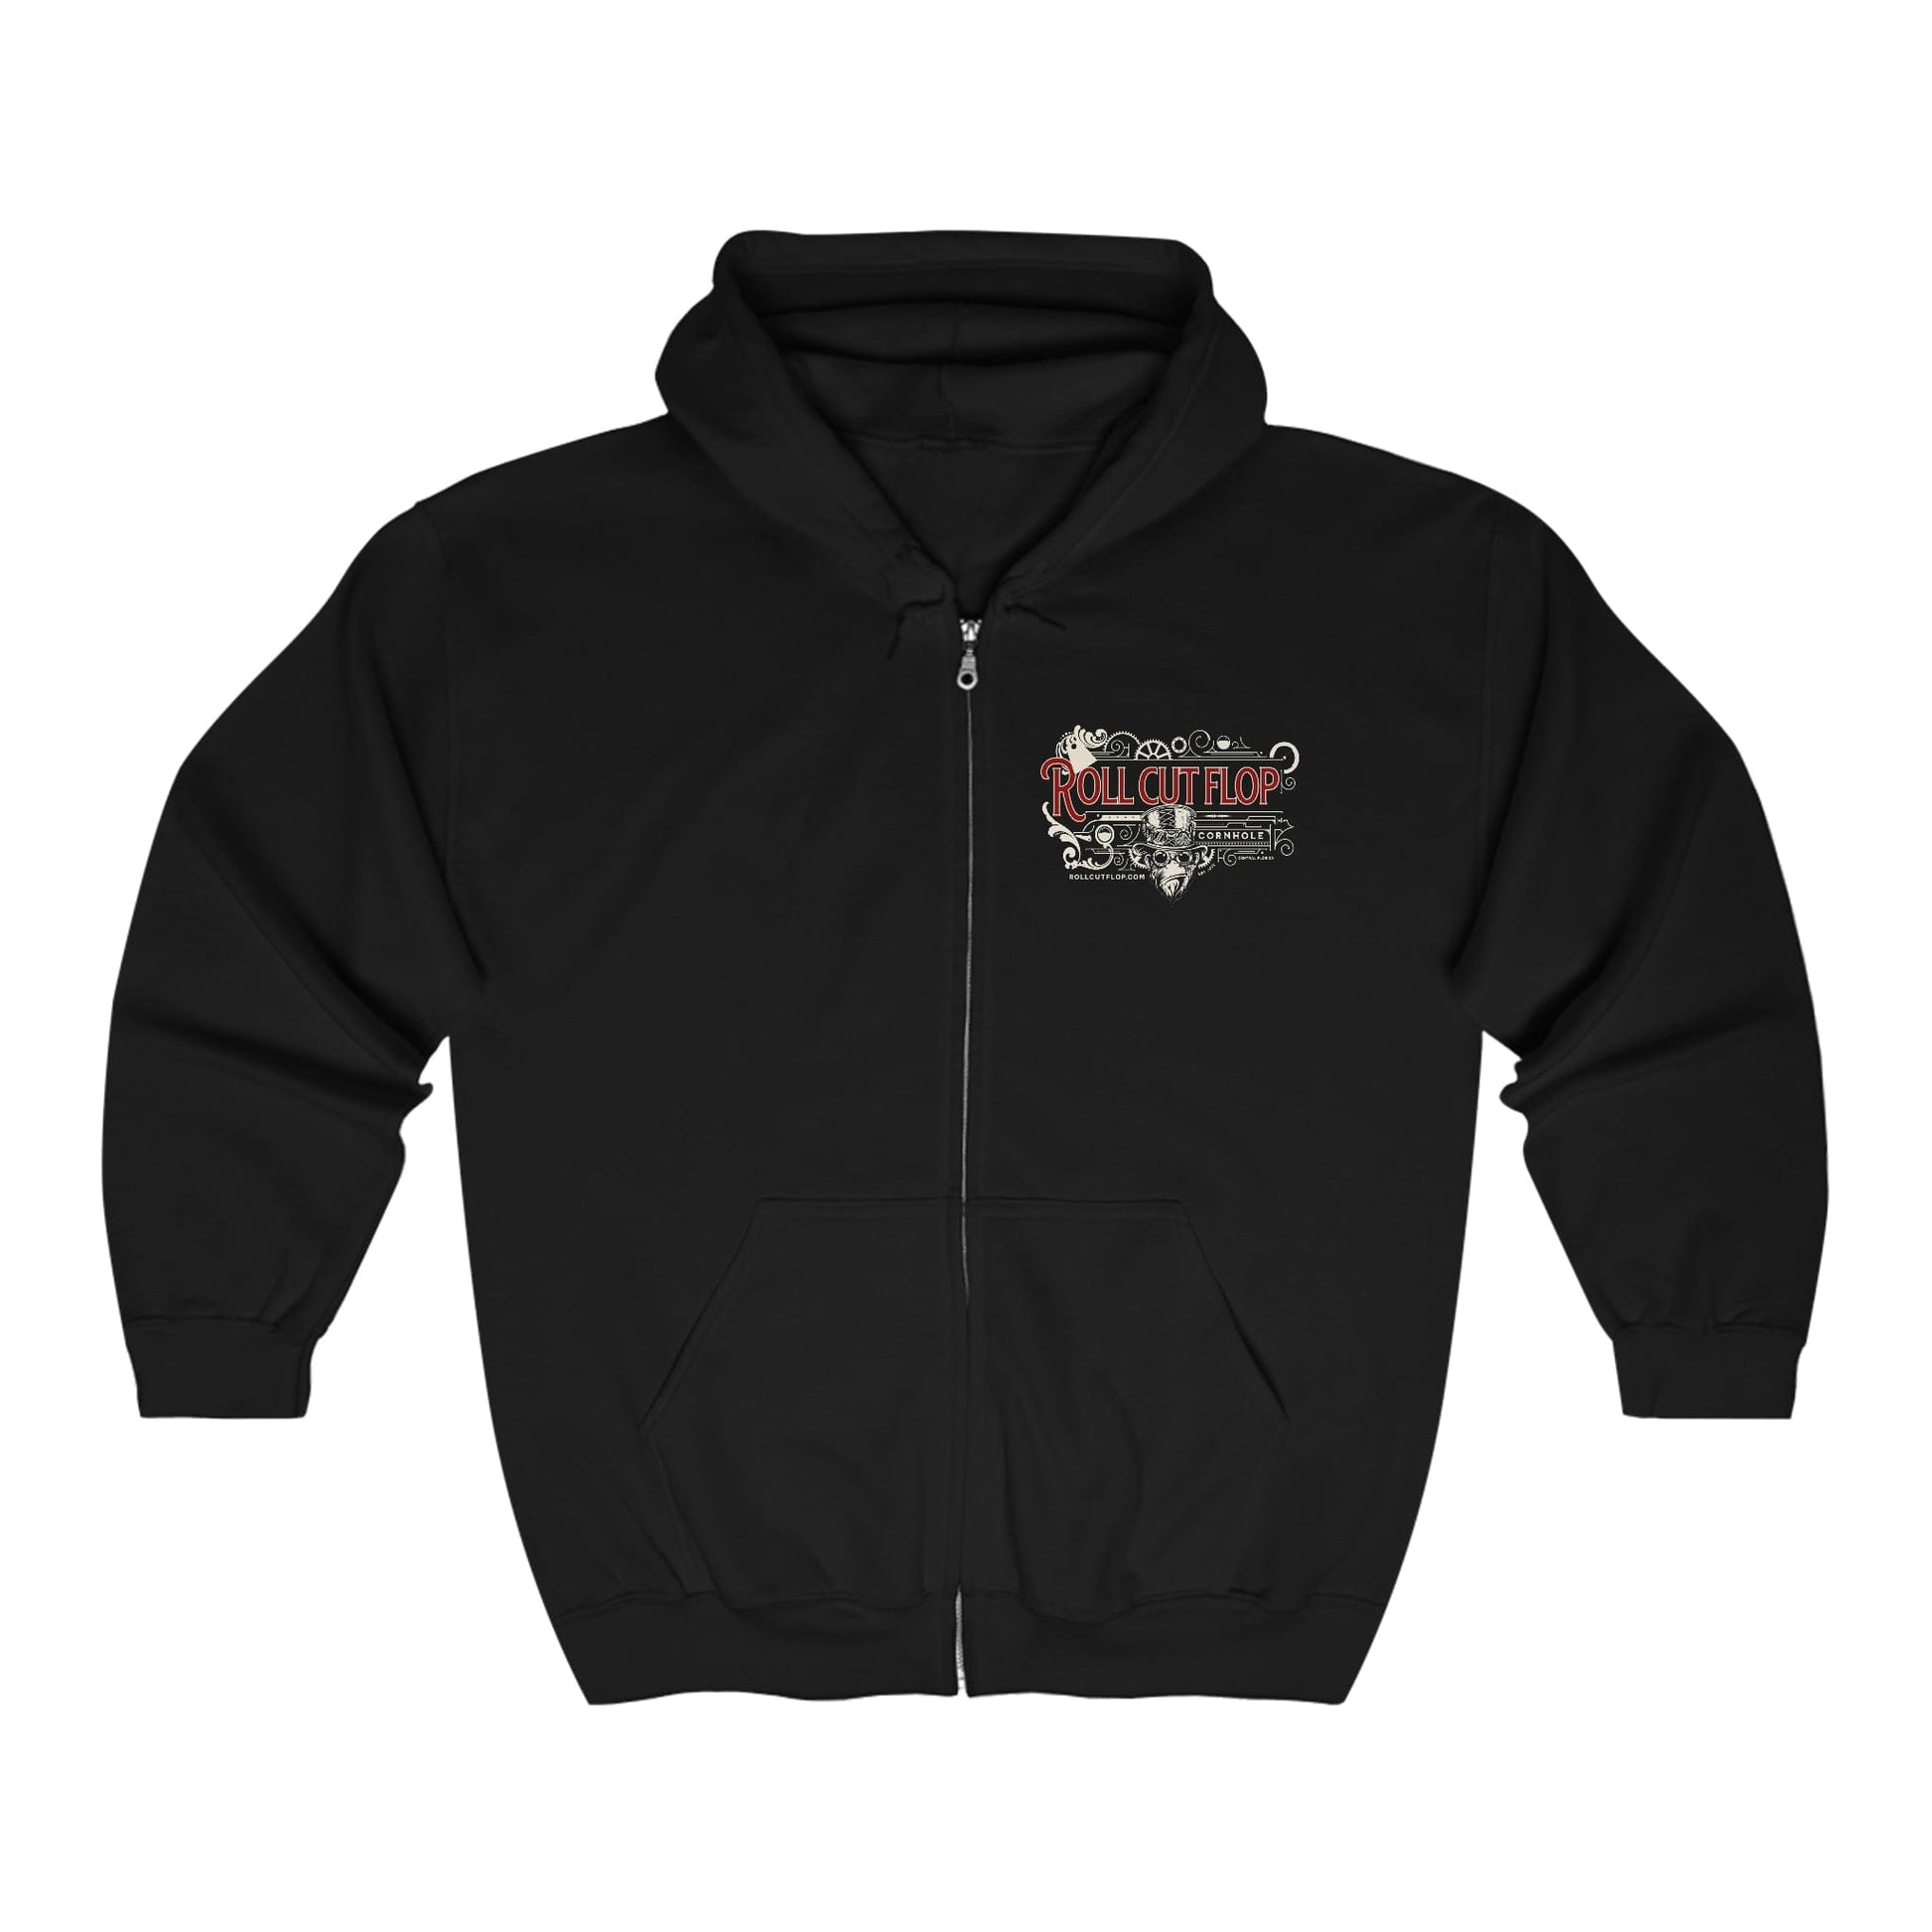 Front View - Roll Cut Flop Cornhole™ Unisex Black Zip-Up Hoodie Sweatshirt - Steampunk Vintage Red Scroll Logo